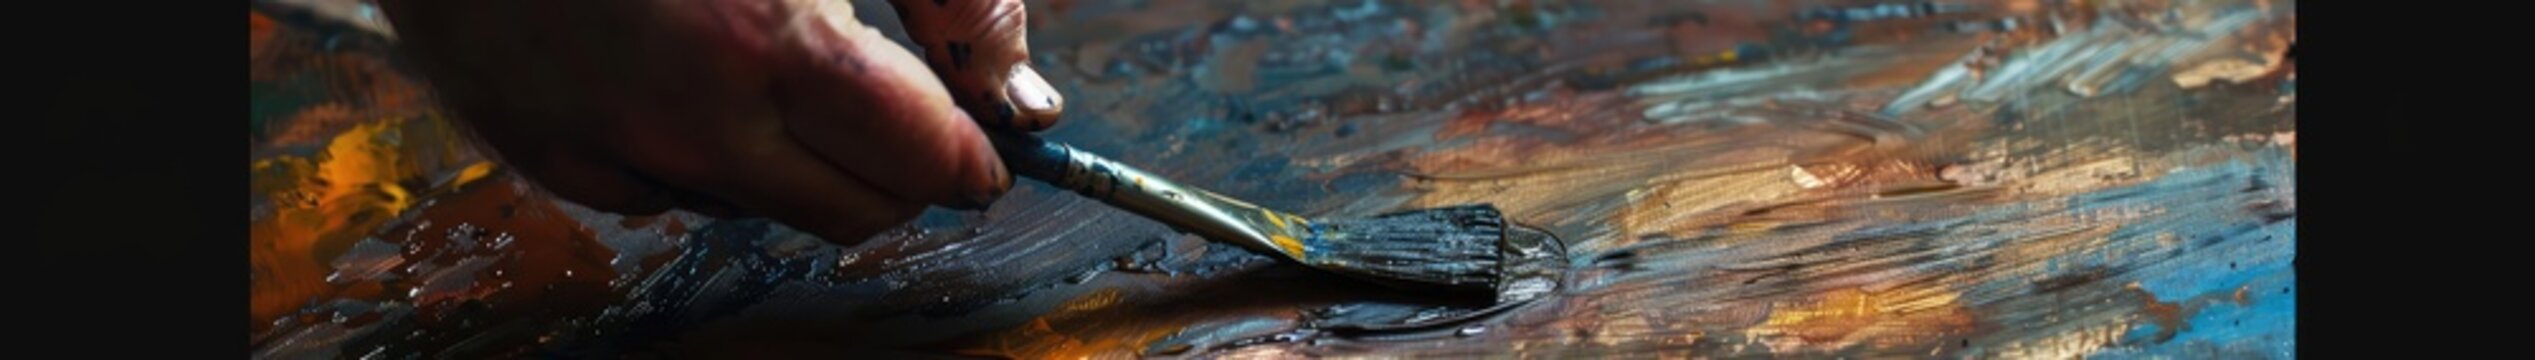 Artist paints a picture with oil paints on canvas. Close-up.